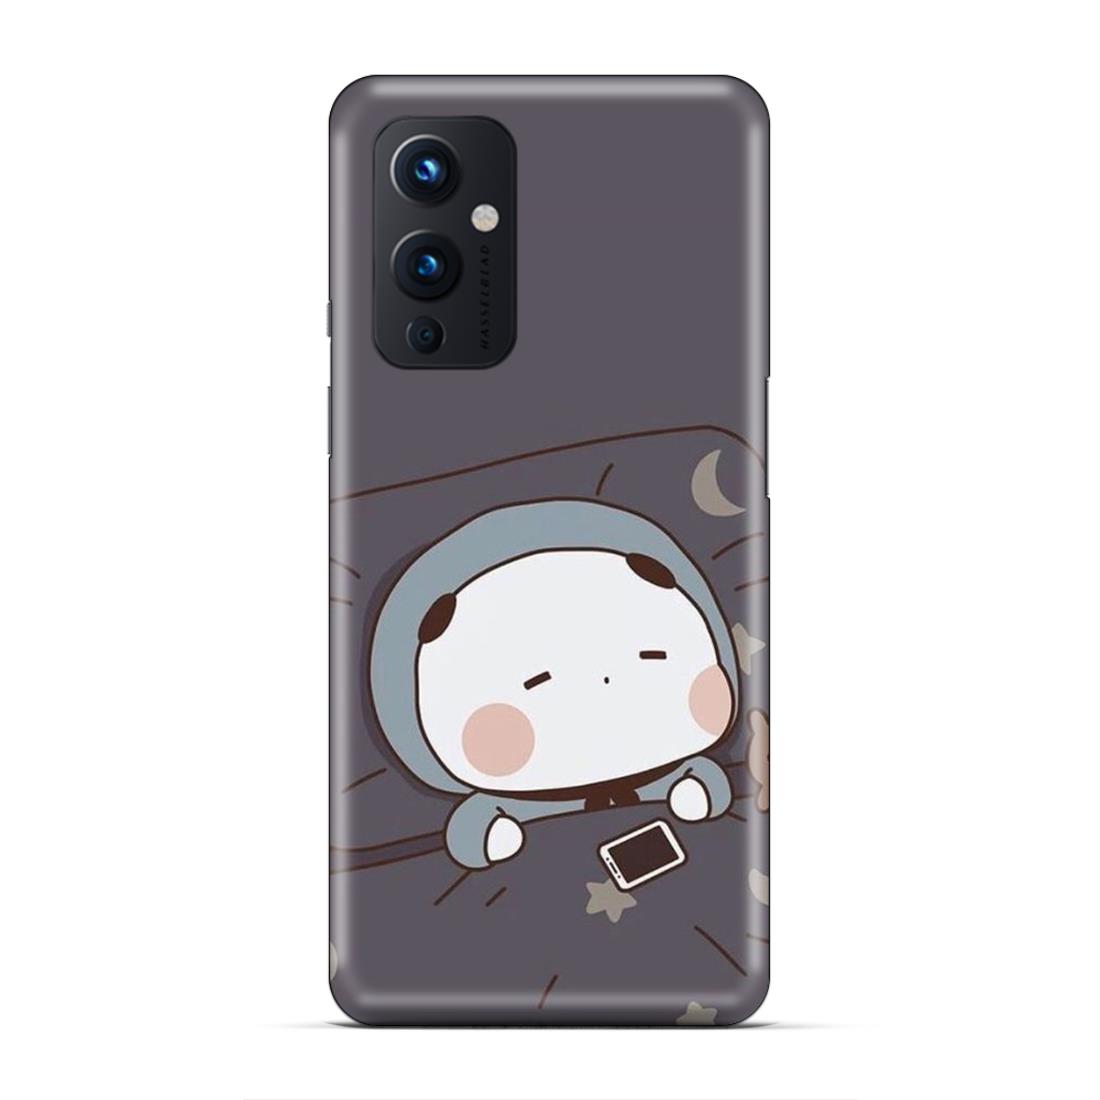 Cute Sleeping Cartoon Oneplus 9 Mobile Phone Cover – 